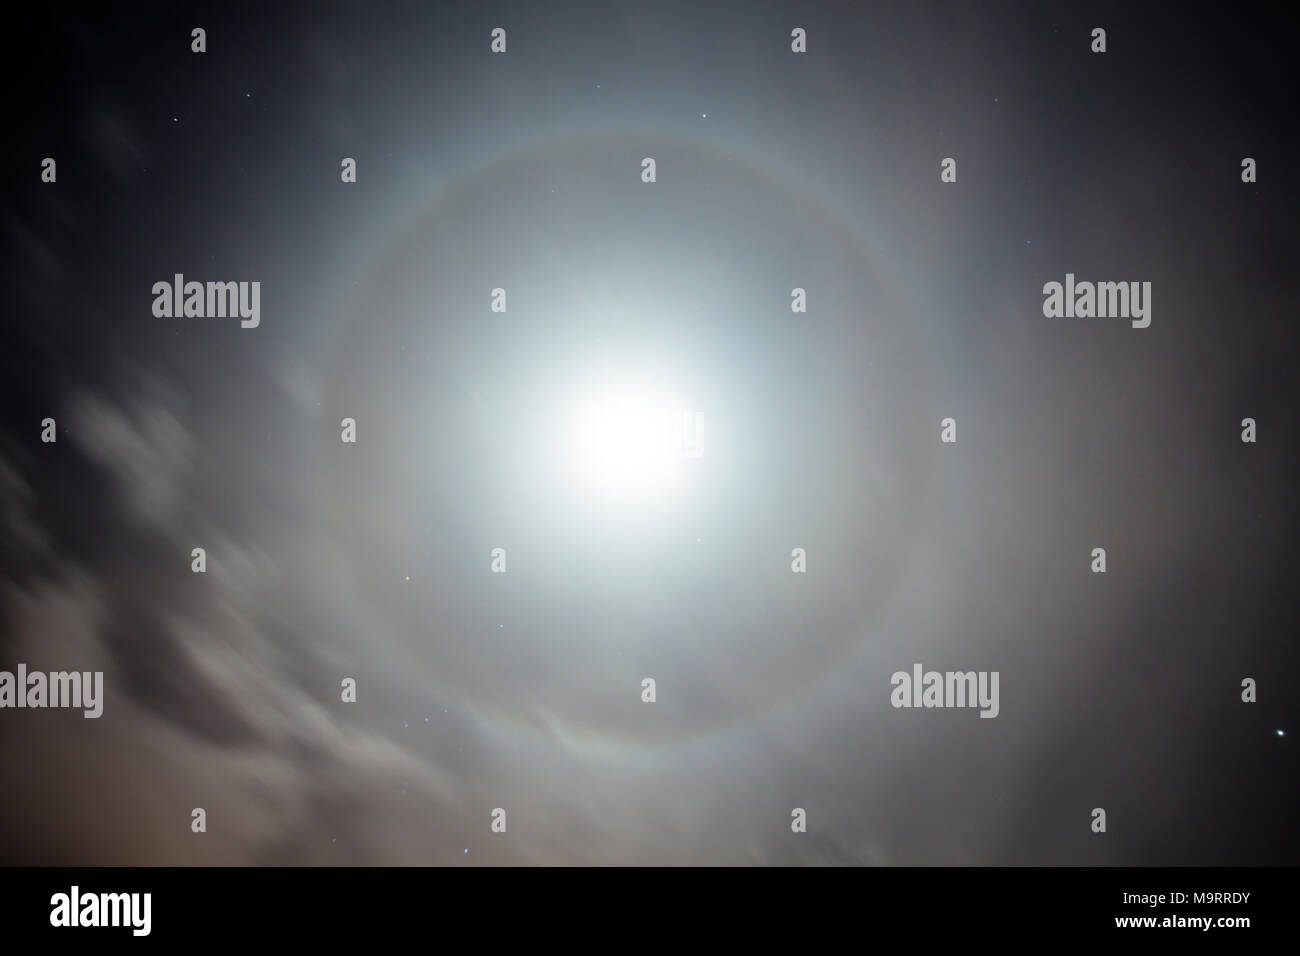 A 22° halo around the moon at night. Stock Photo